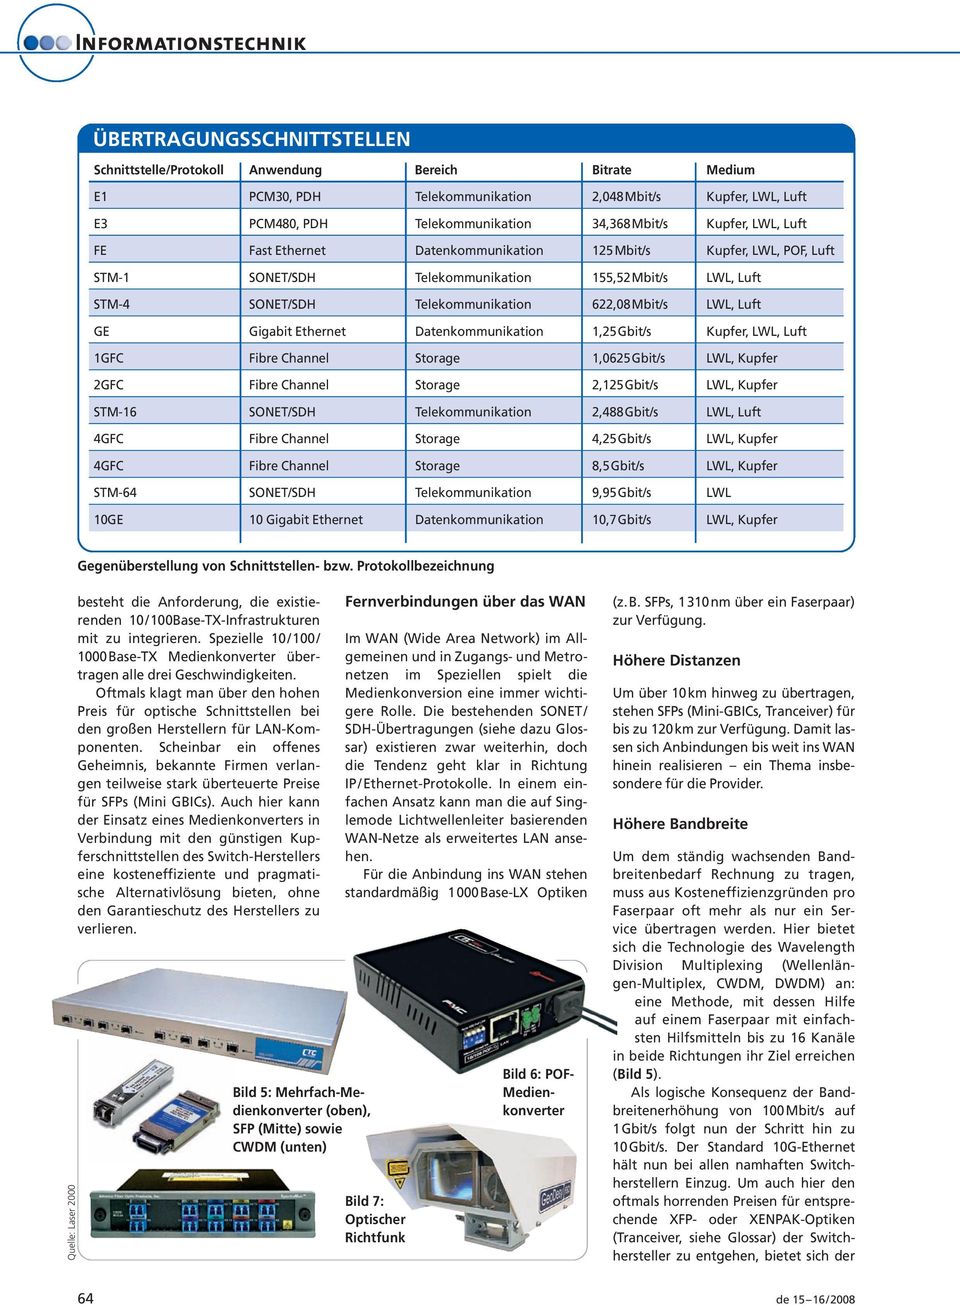 Gigabit Ethernet Datenkommunikation 1,25Gbit/s Kupfer, LWL, Luft 1GFC Fibre Channel Storage 1,0625Gbit/s LWL, Kupfer 2GFC Fibre Channel Storage 2,125Gbit/s LWL, Kupfer STM-16 SONET/SDH